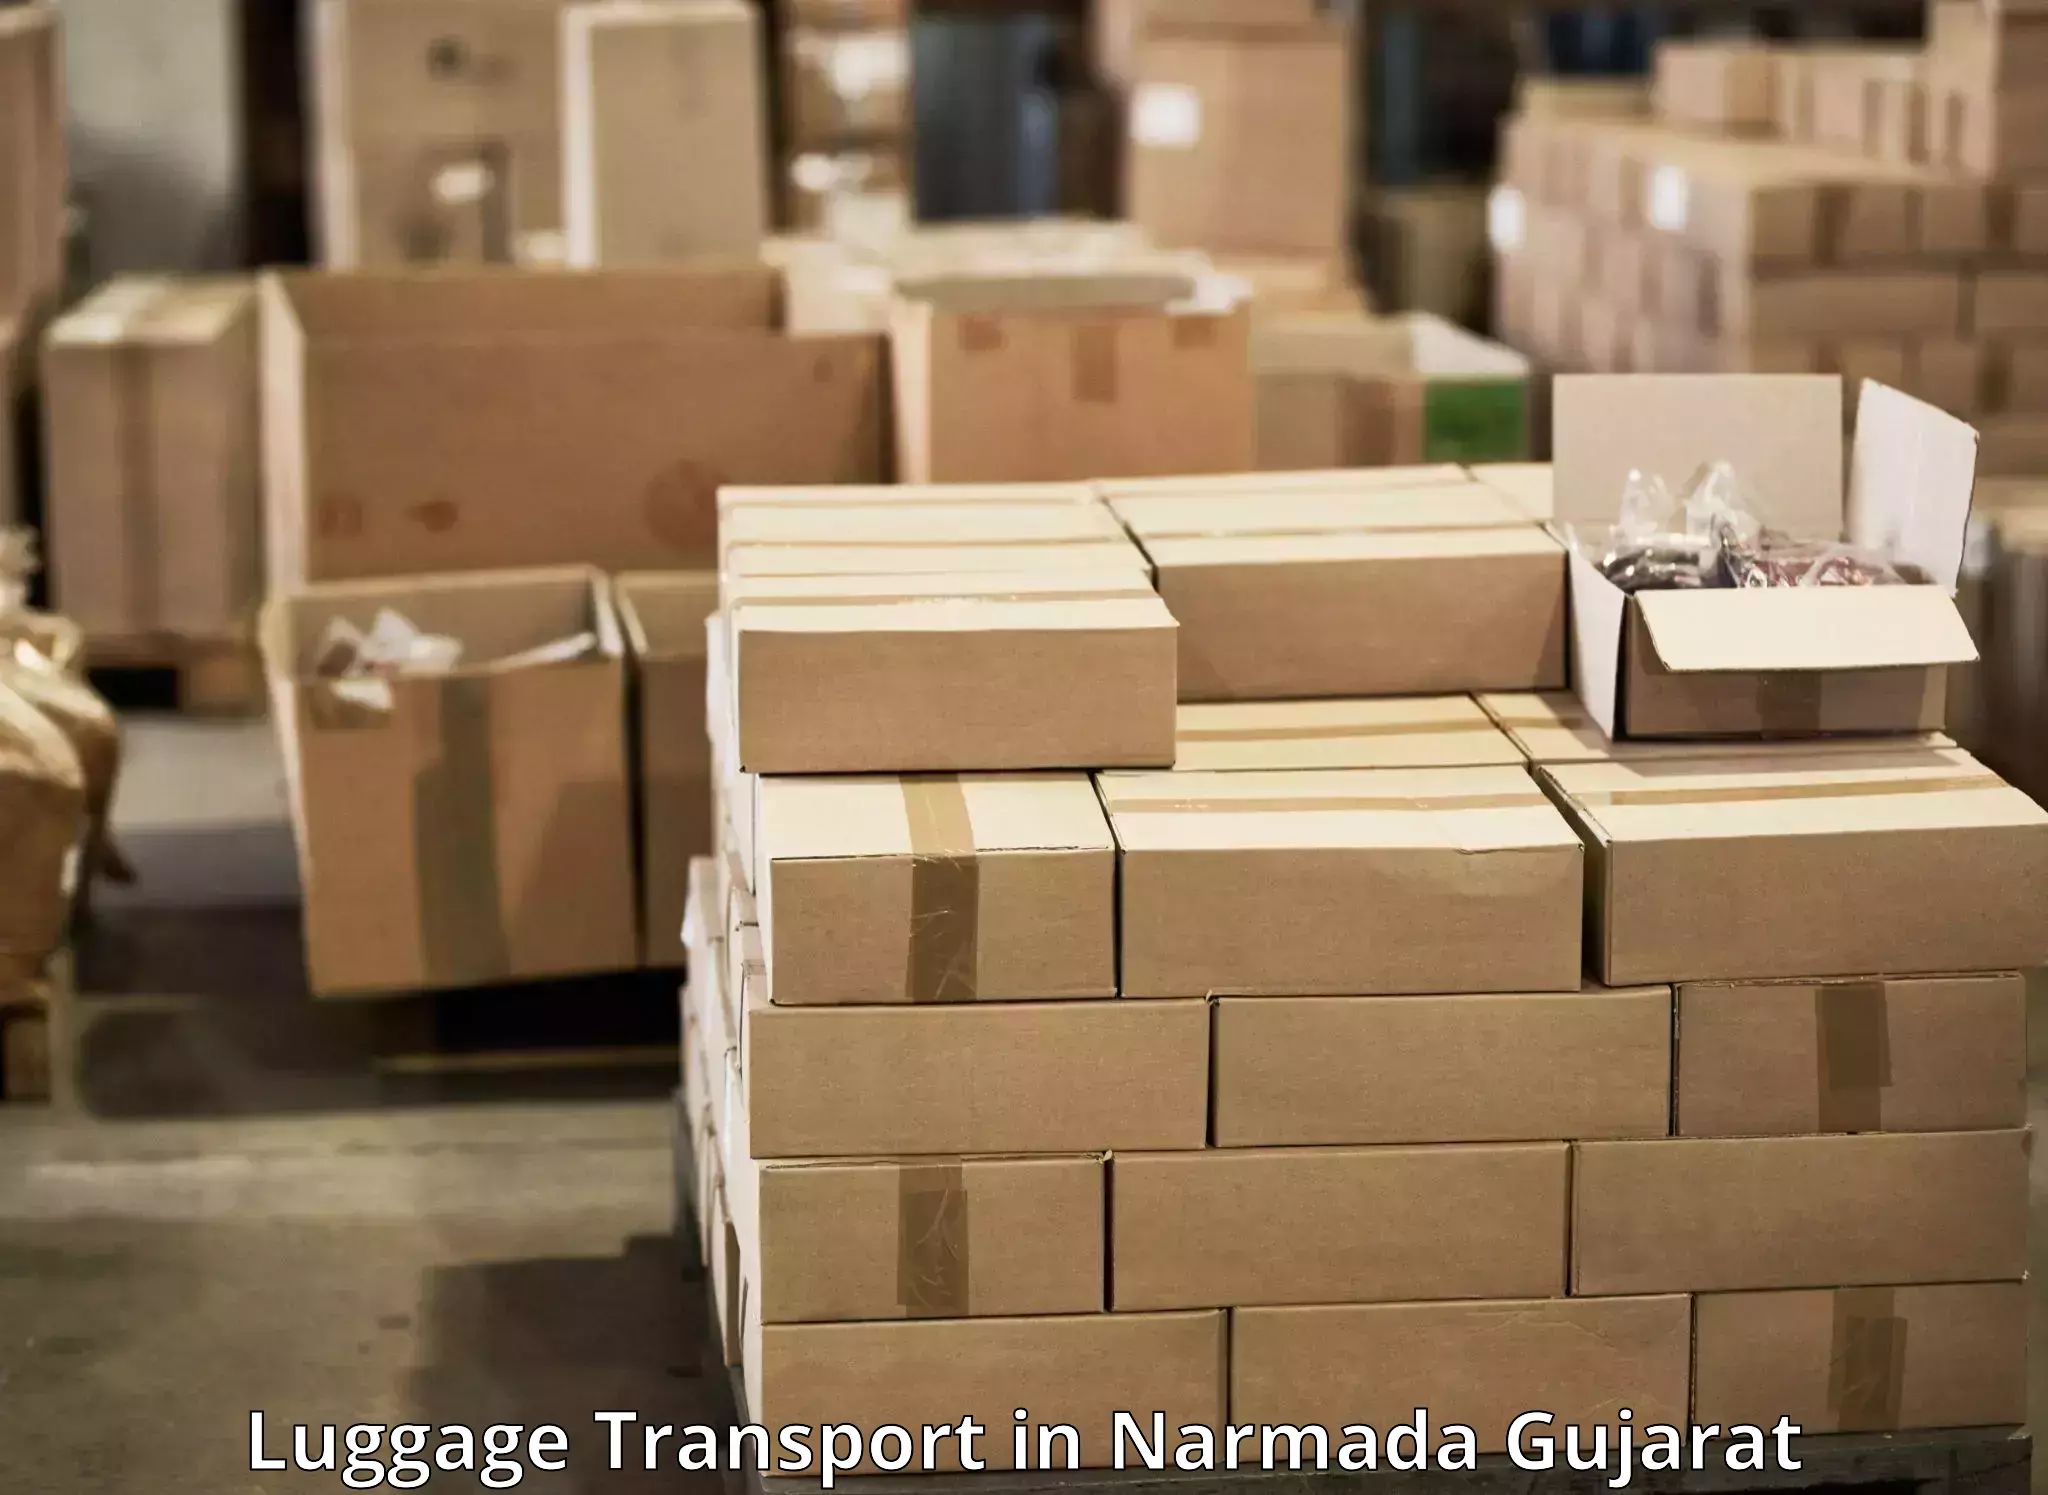 Luggage transit service in Narmada Gujarat